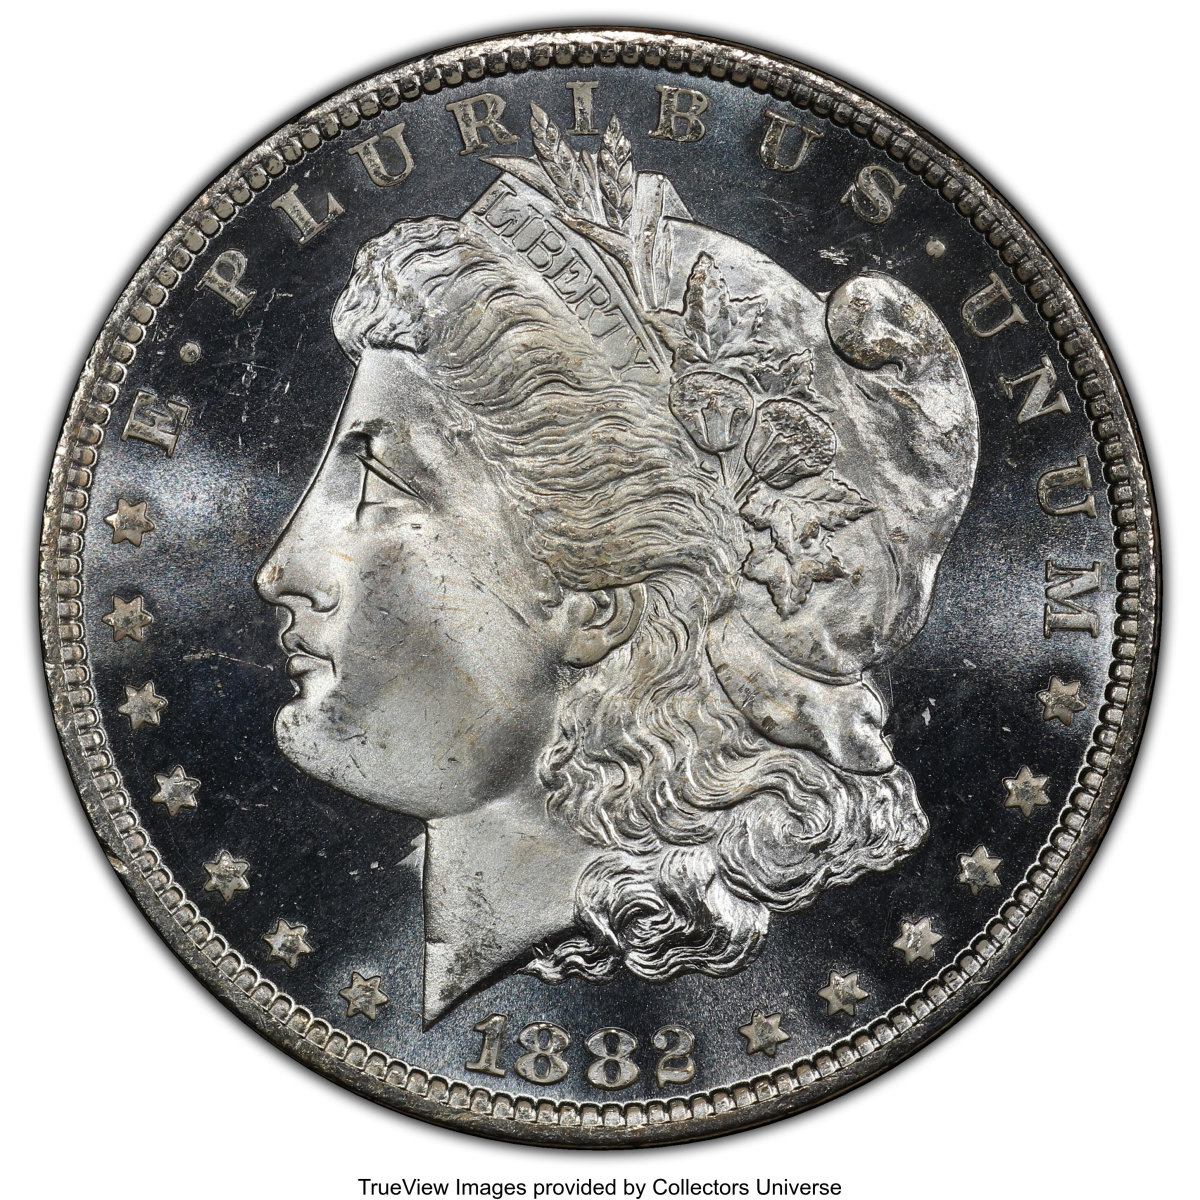 1882-CC Morgan dollar. (Image courtesy Heritage Auctions, HA.com.)